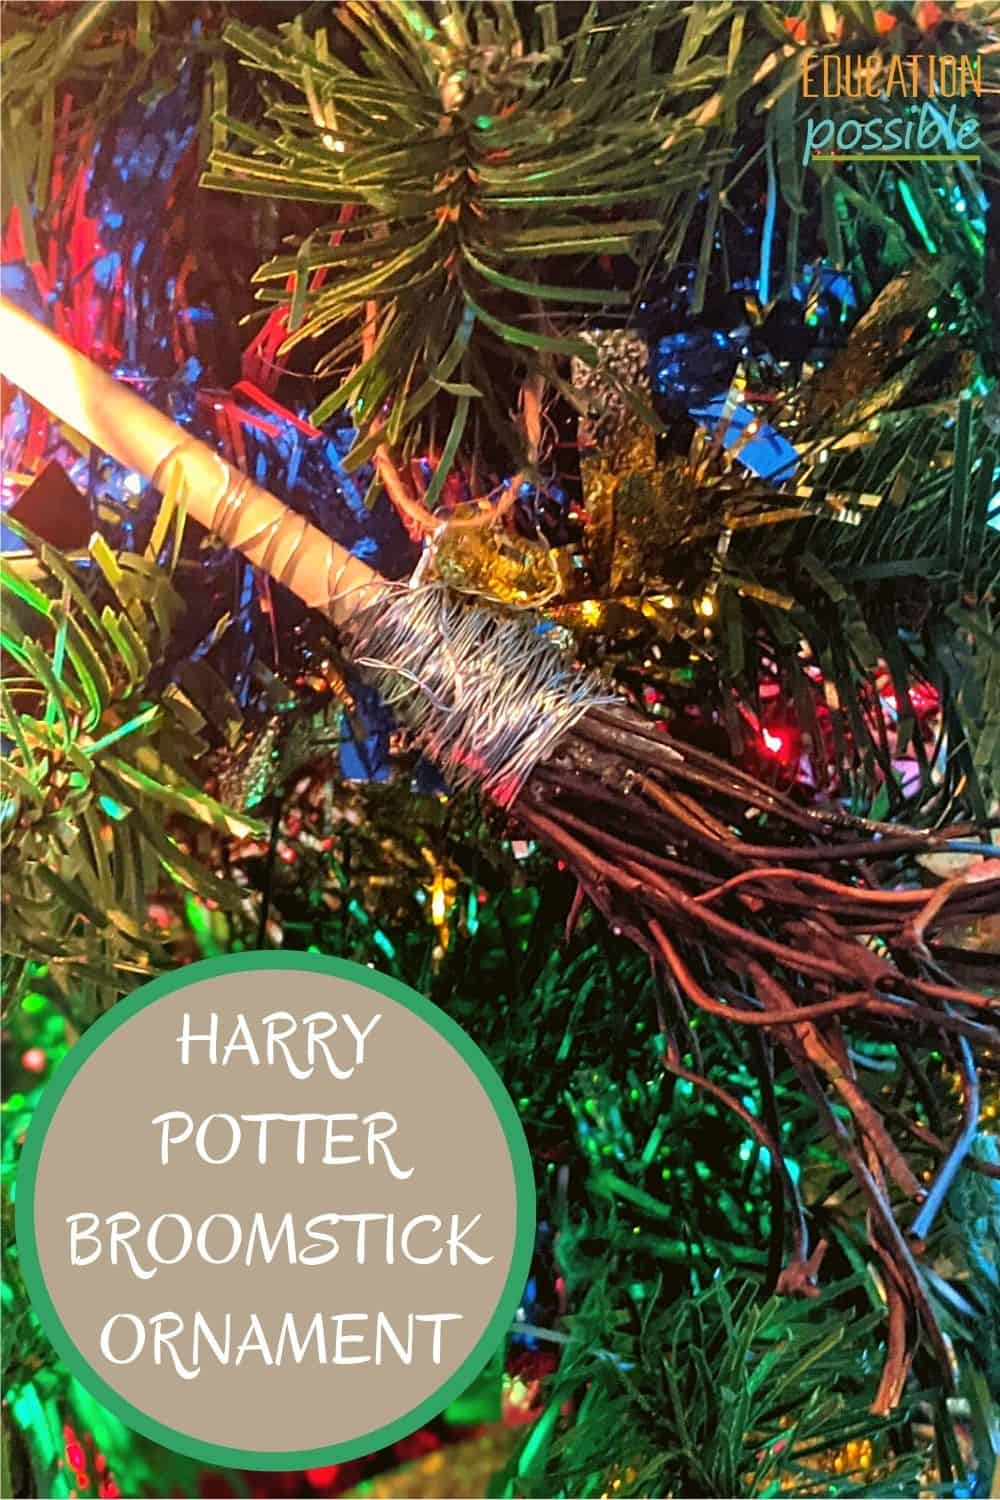 Mini DIY Harry Potter quidditch broom hanging on Christmas tree.